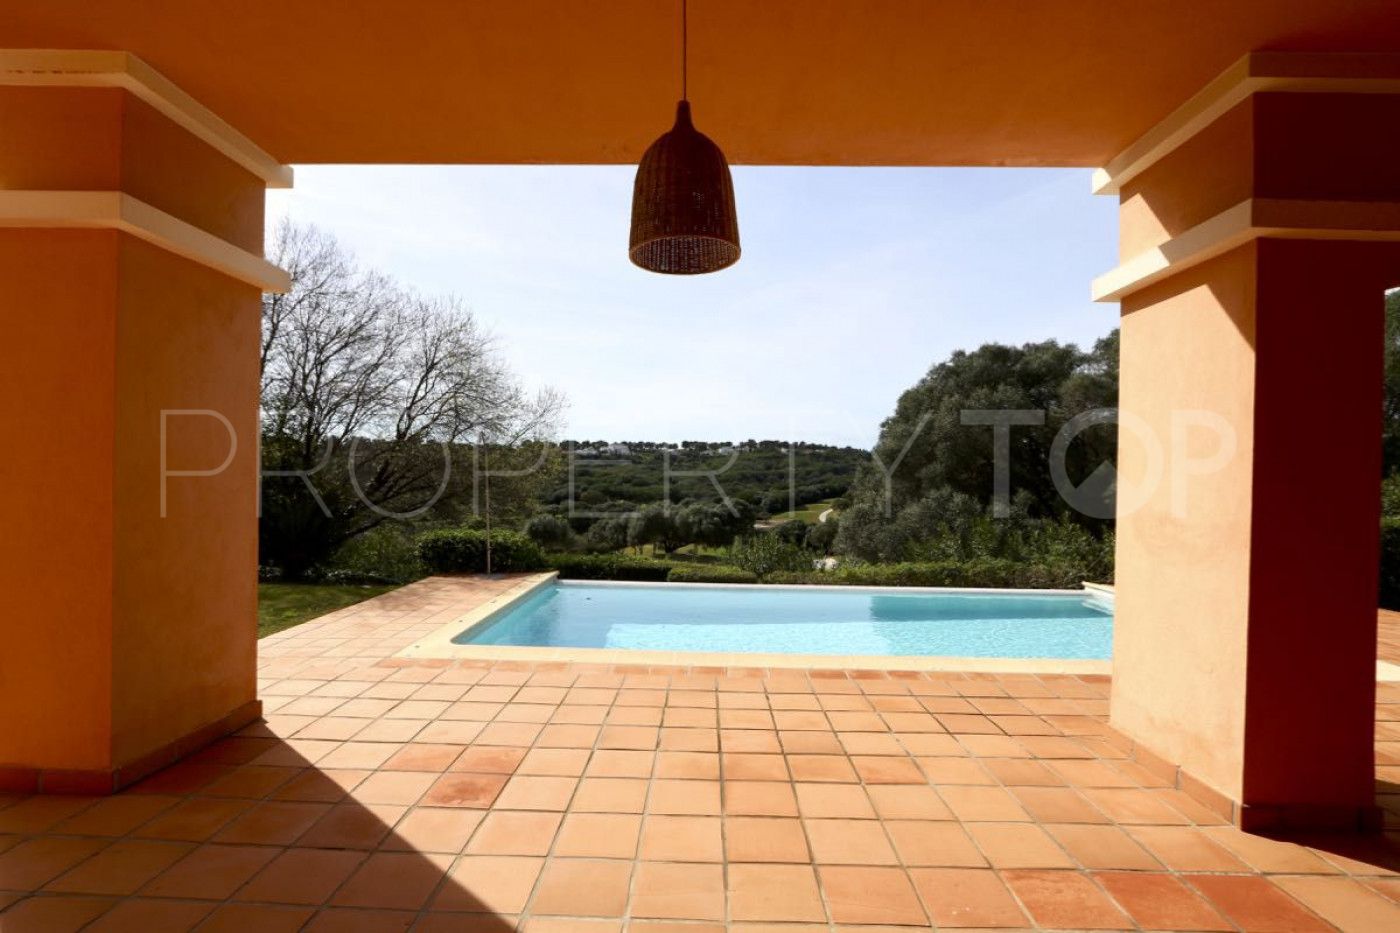 For sale villa in Sotogrande Alto with 4 bedrooms